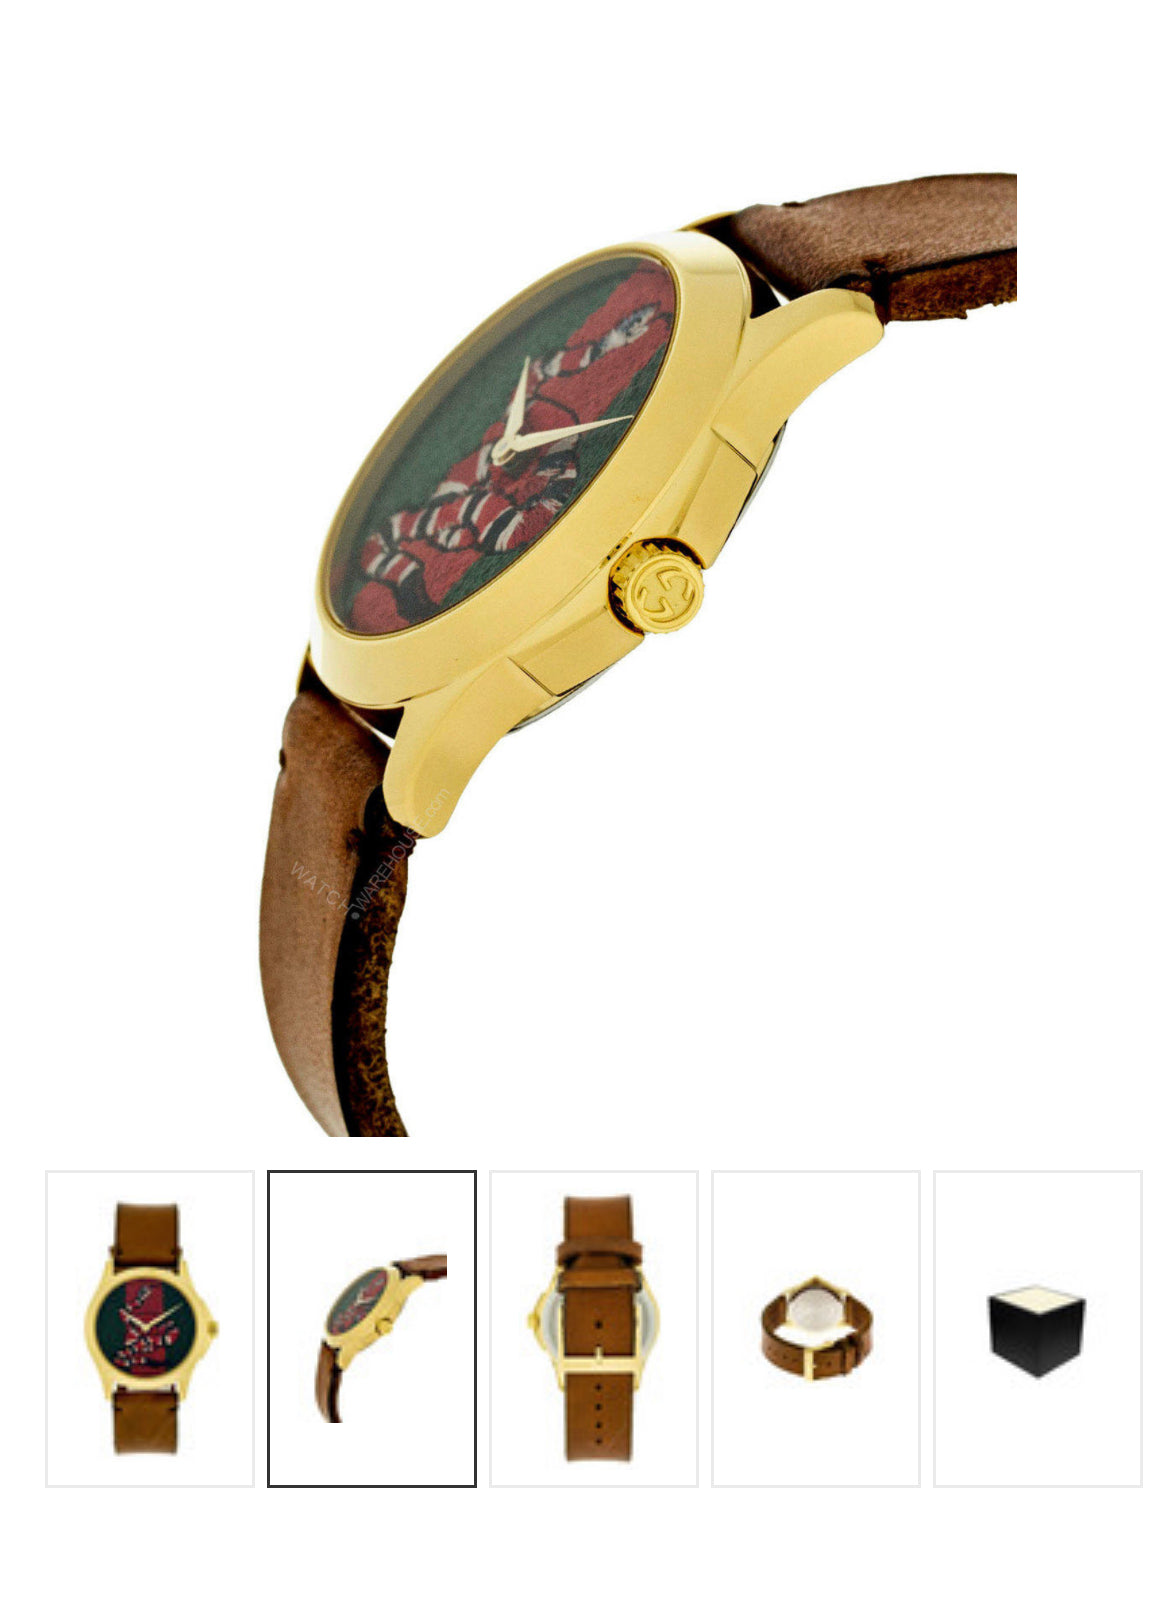 Gucci watch